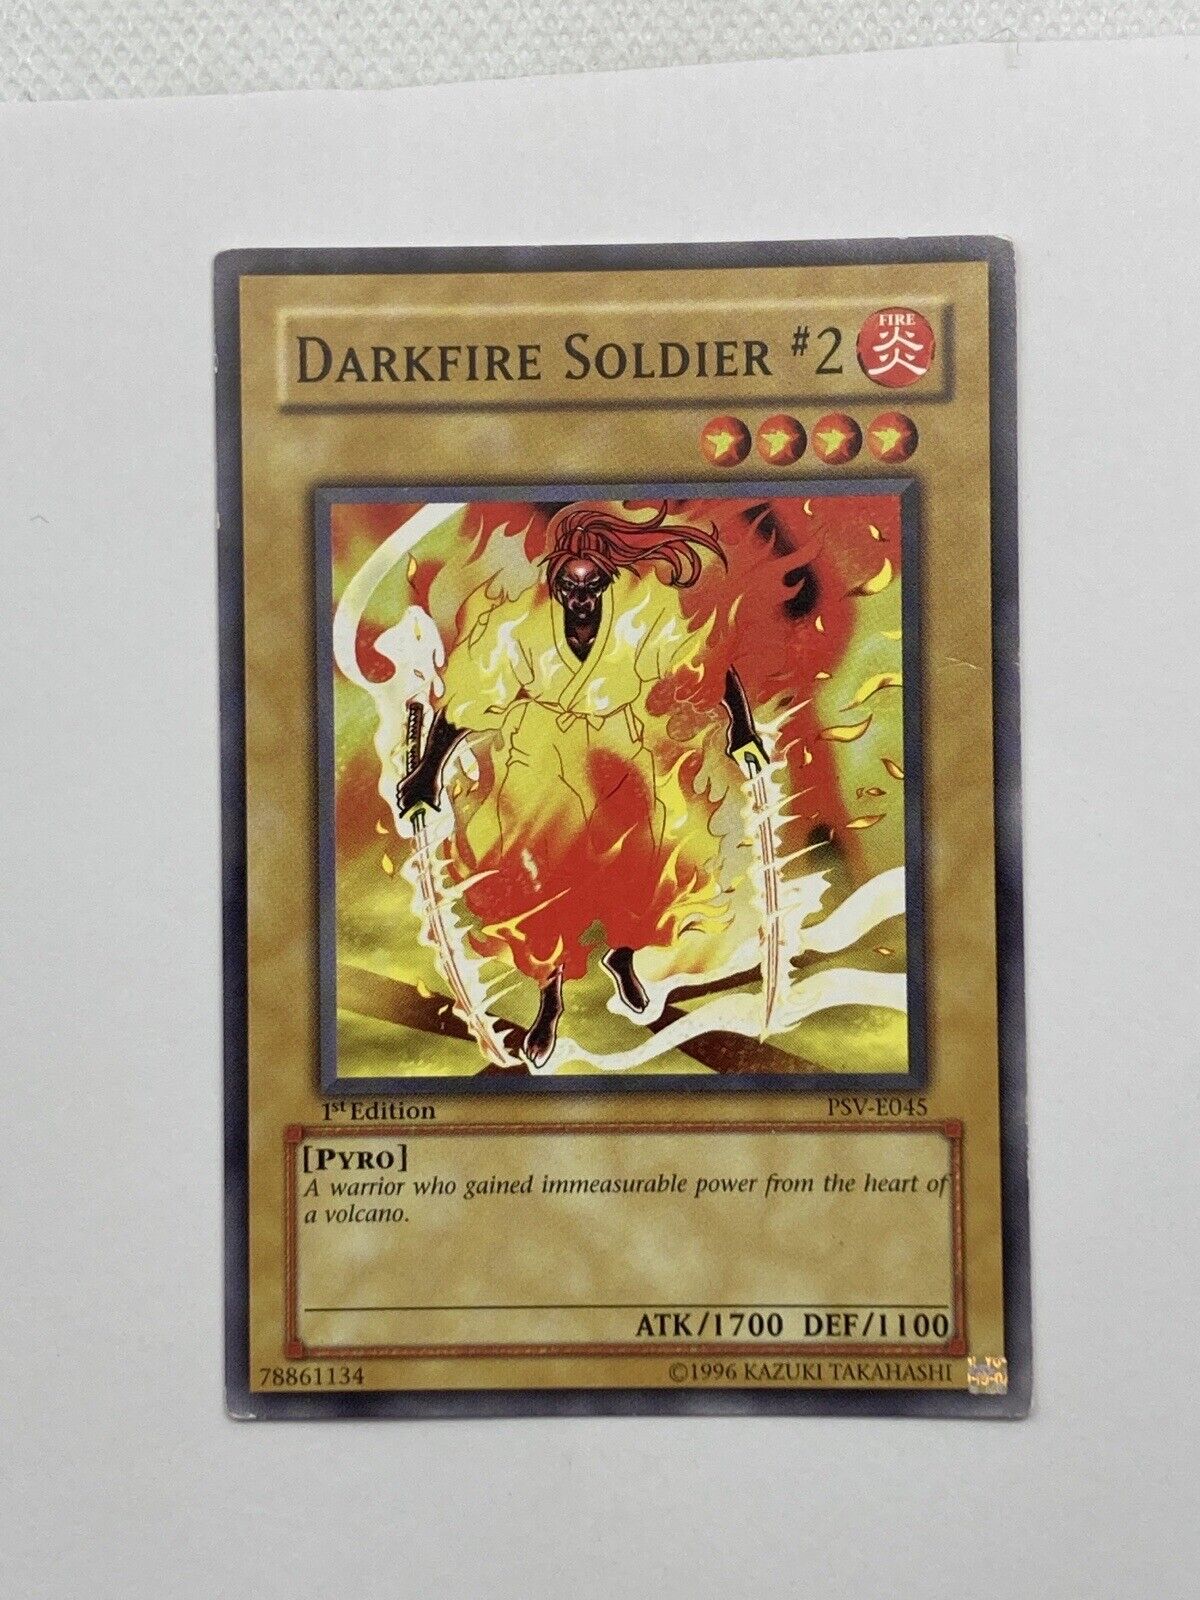 Darkfire Soldier #2 PSV-E045 1st Edition 2004 Yu-Gi-Oh